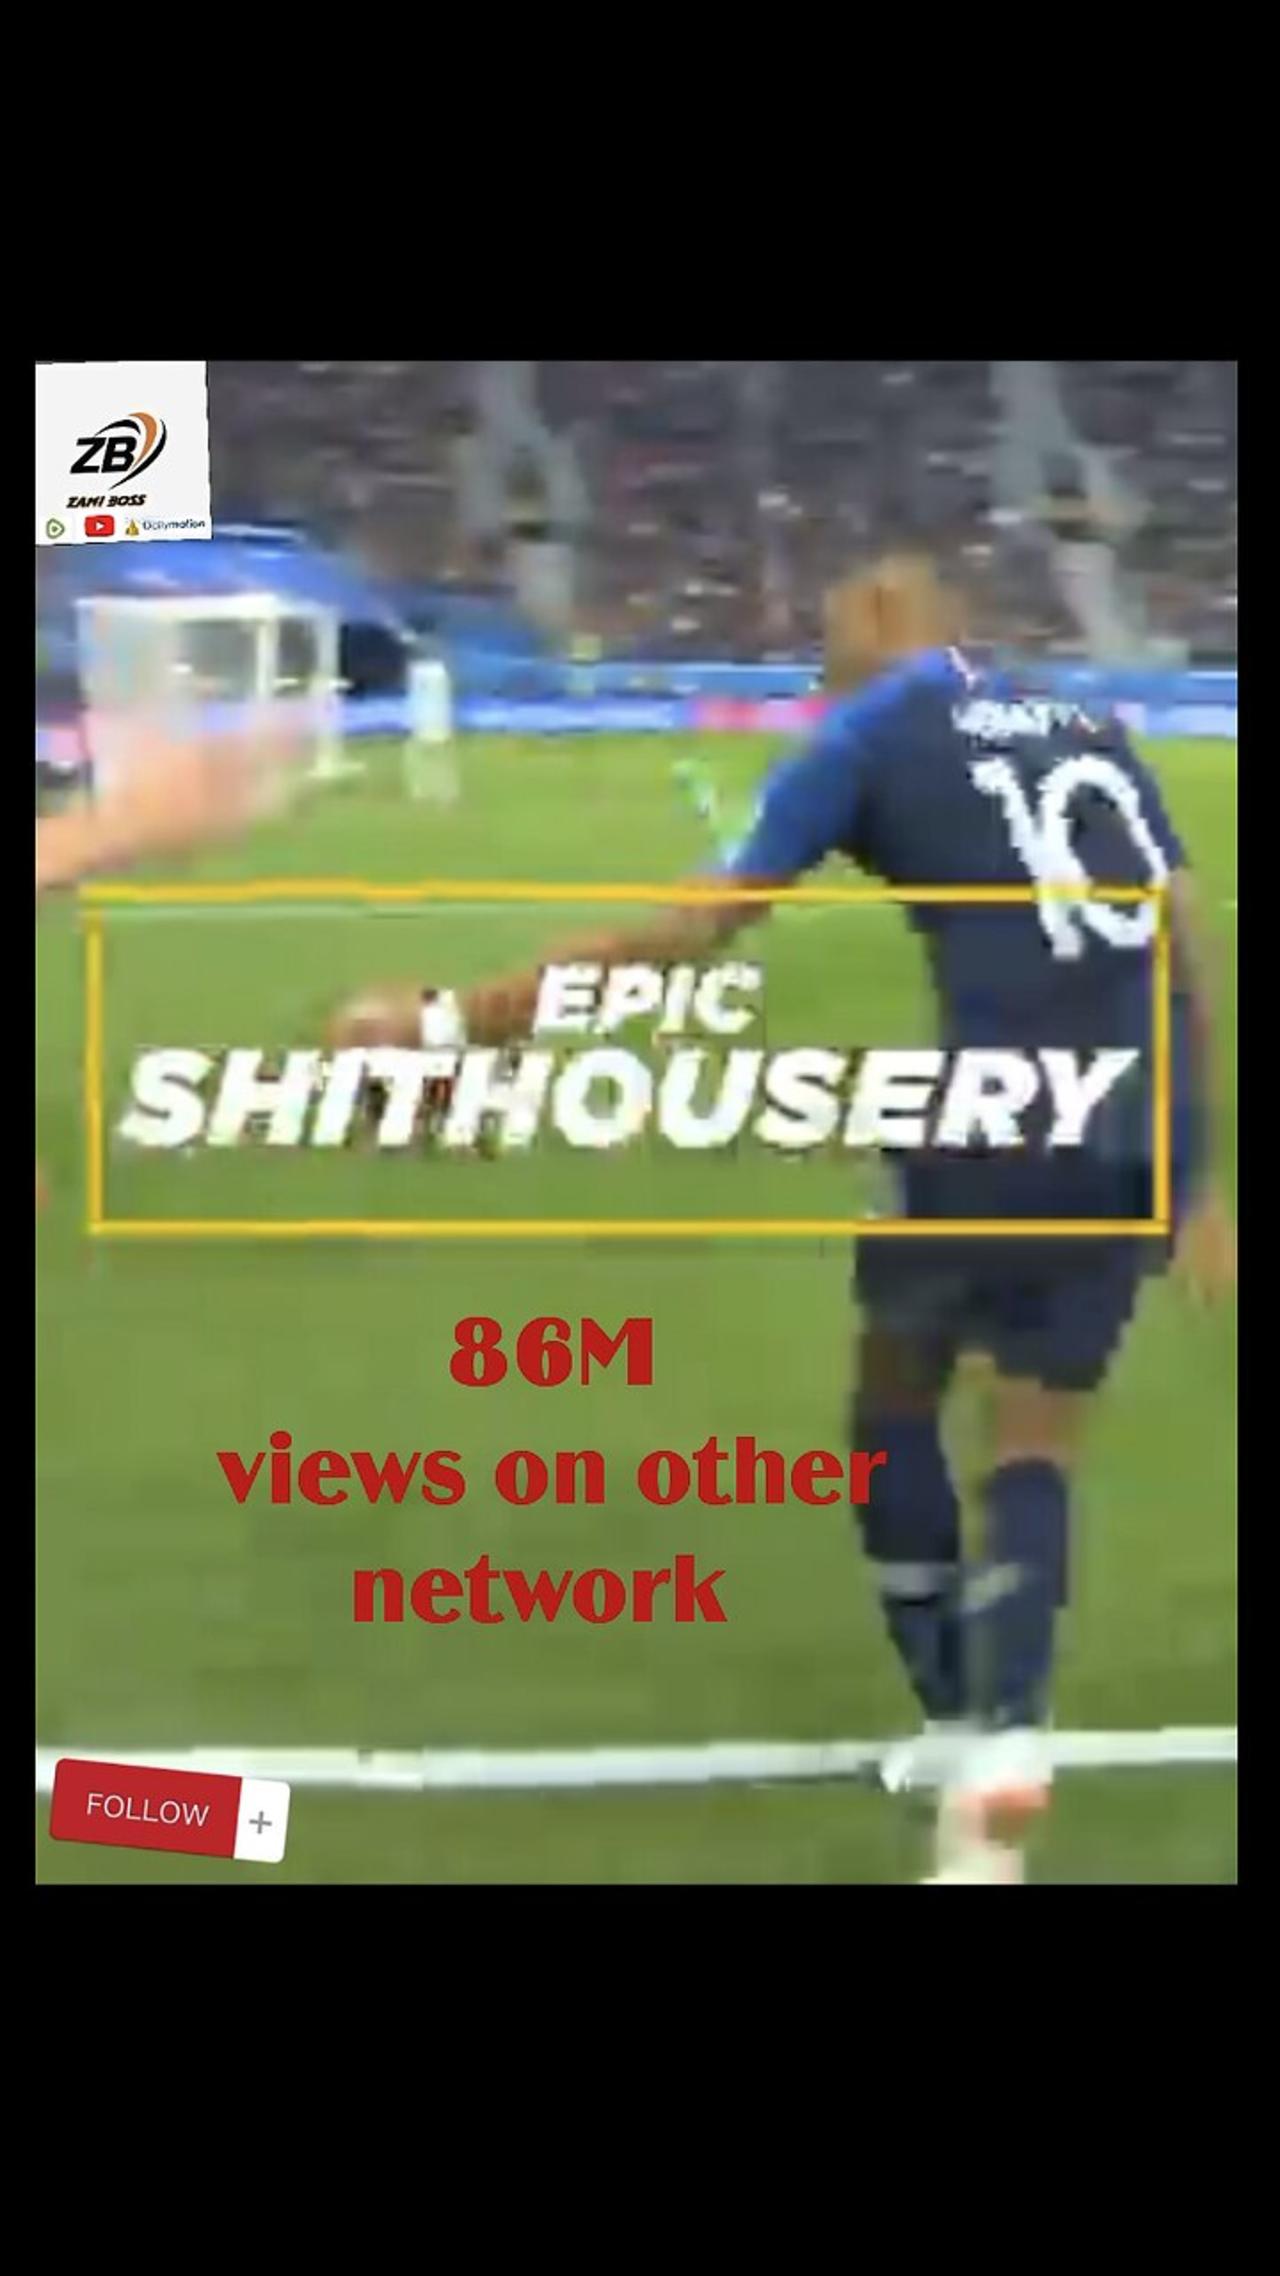 Epic shithousery moment 😜